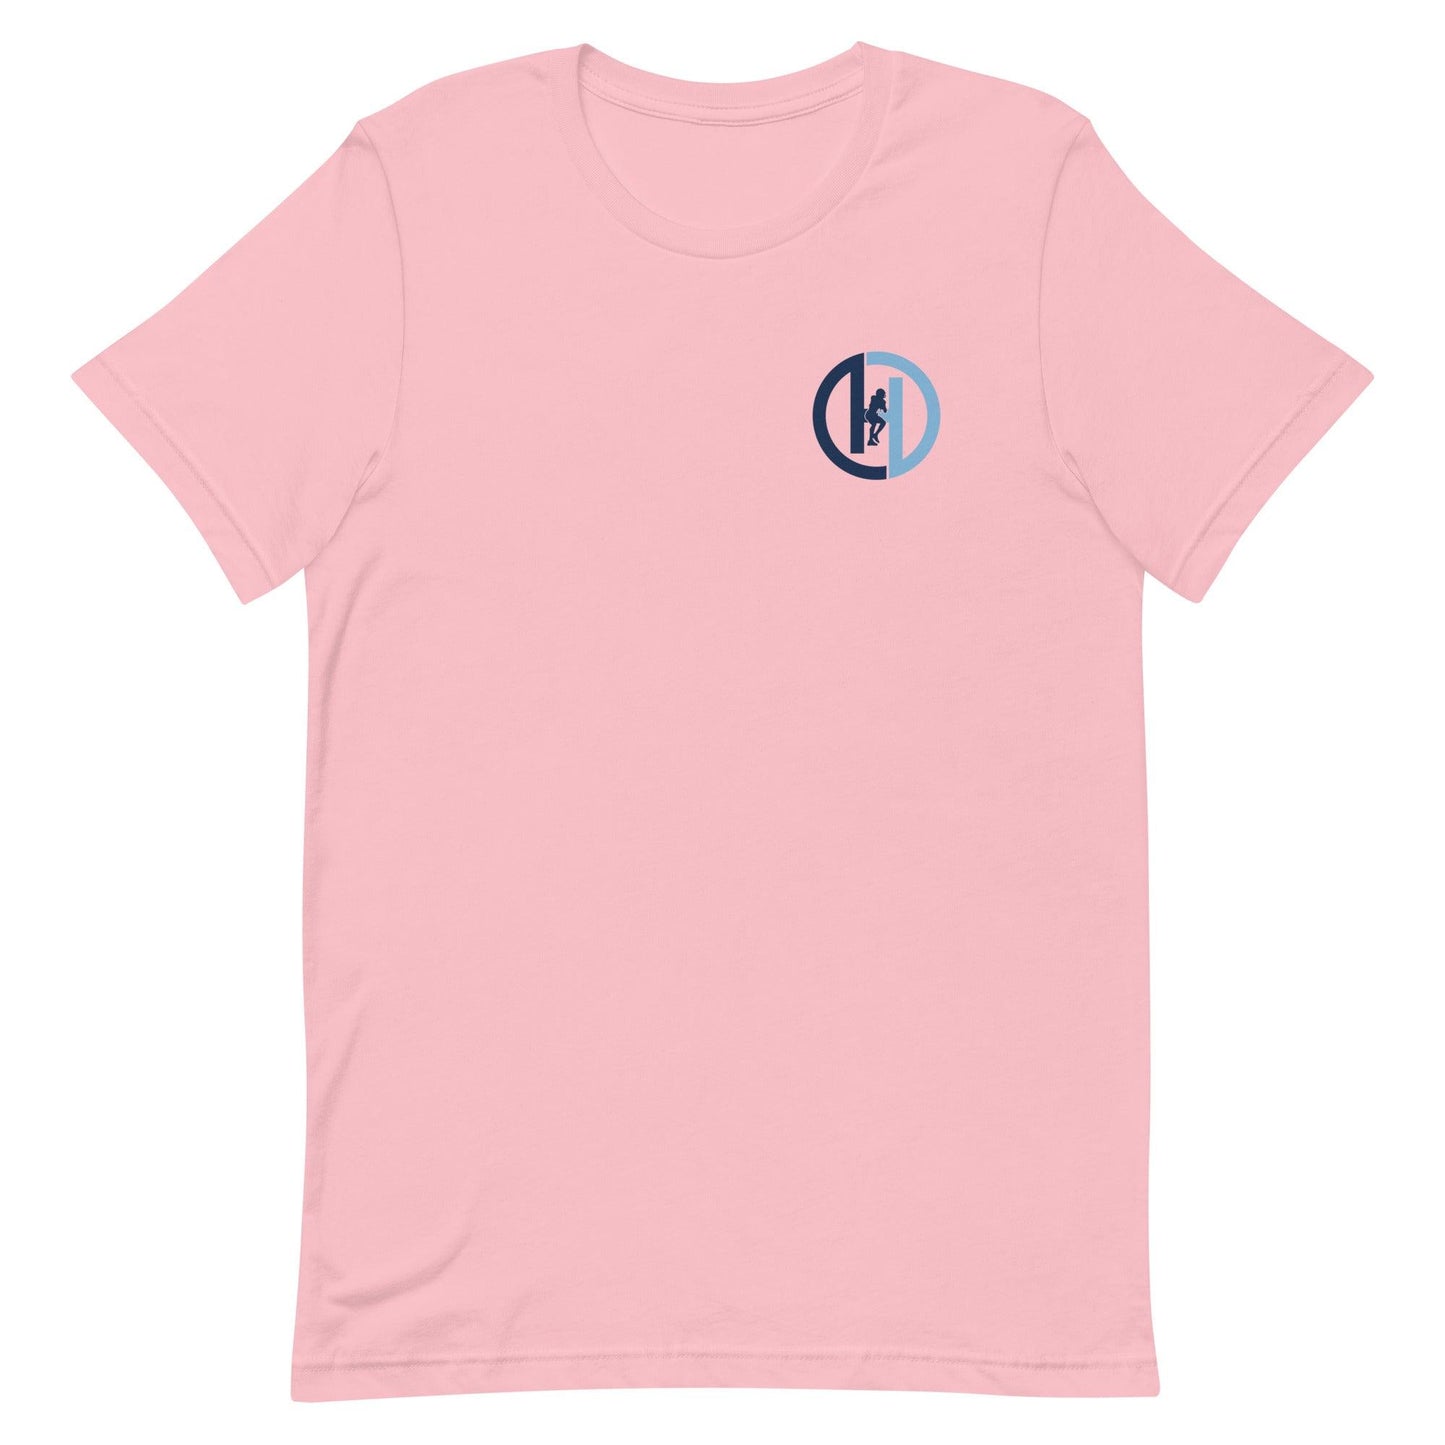 Omarion Hampton "The Brand" t-shirt - Fan Arch